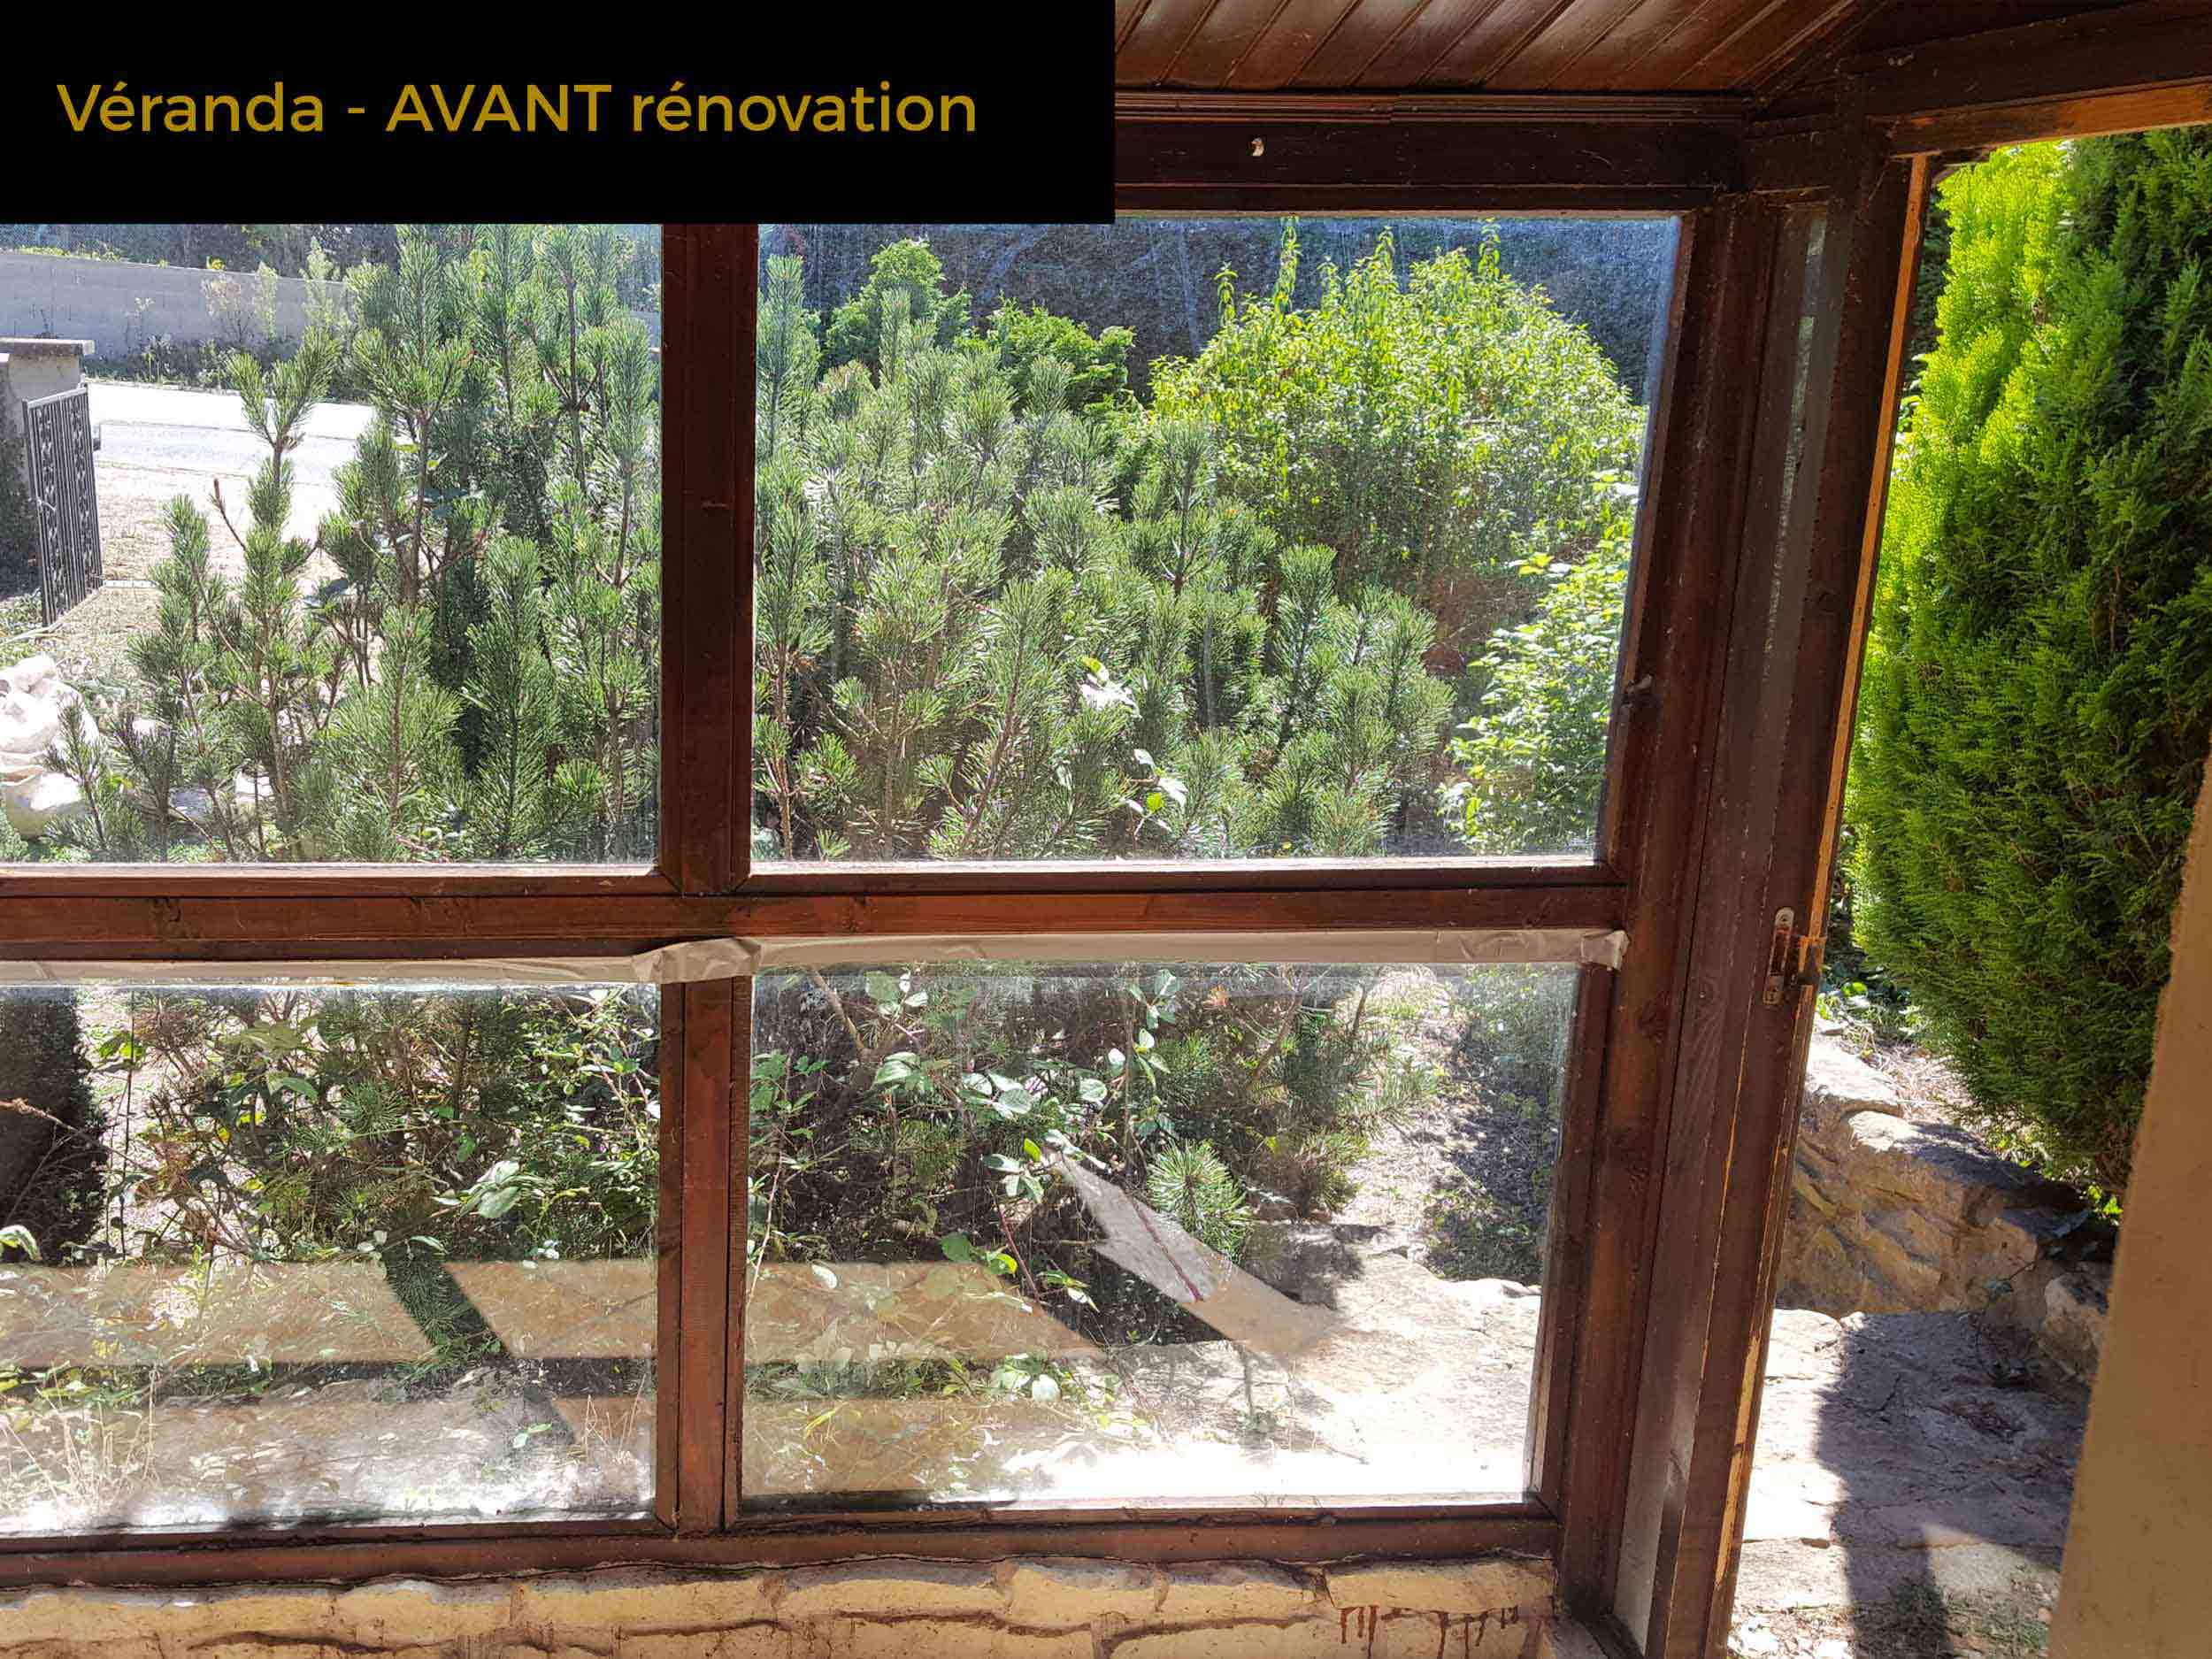 2-renovation-veranda-bois-villefranche-avant